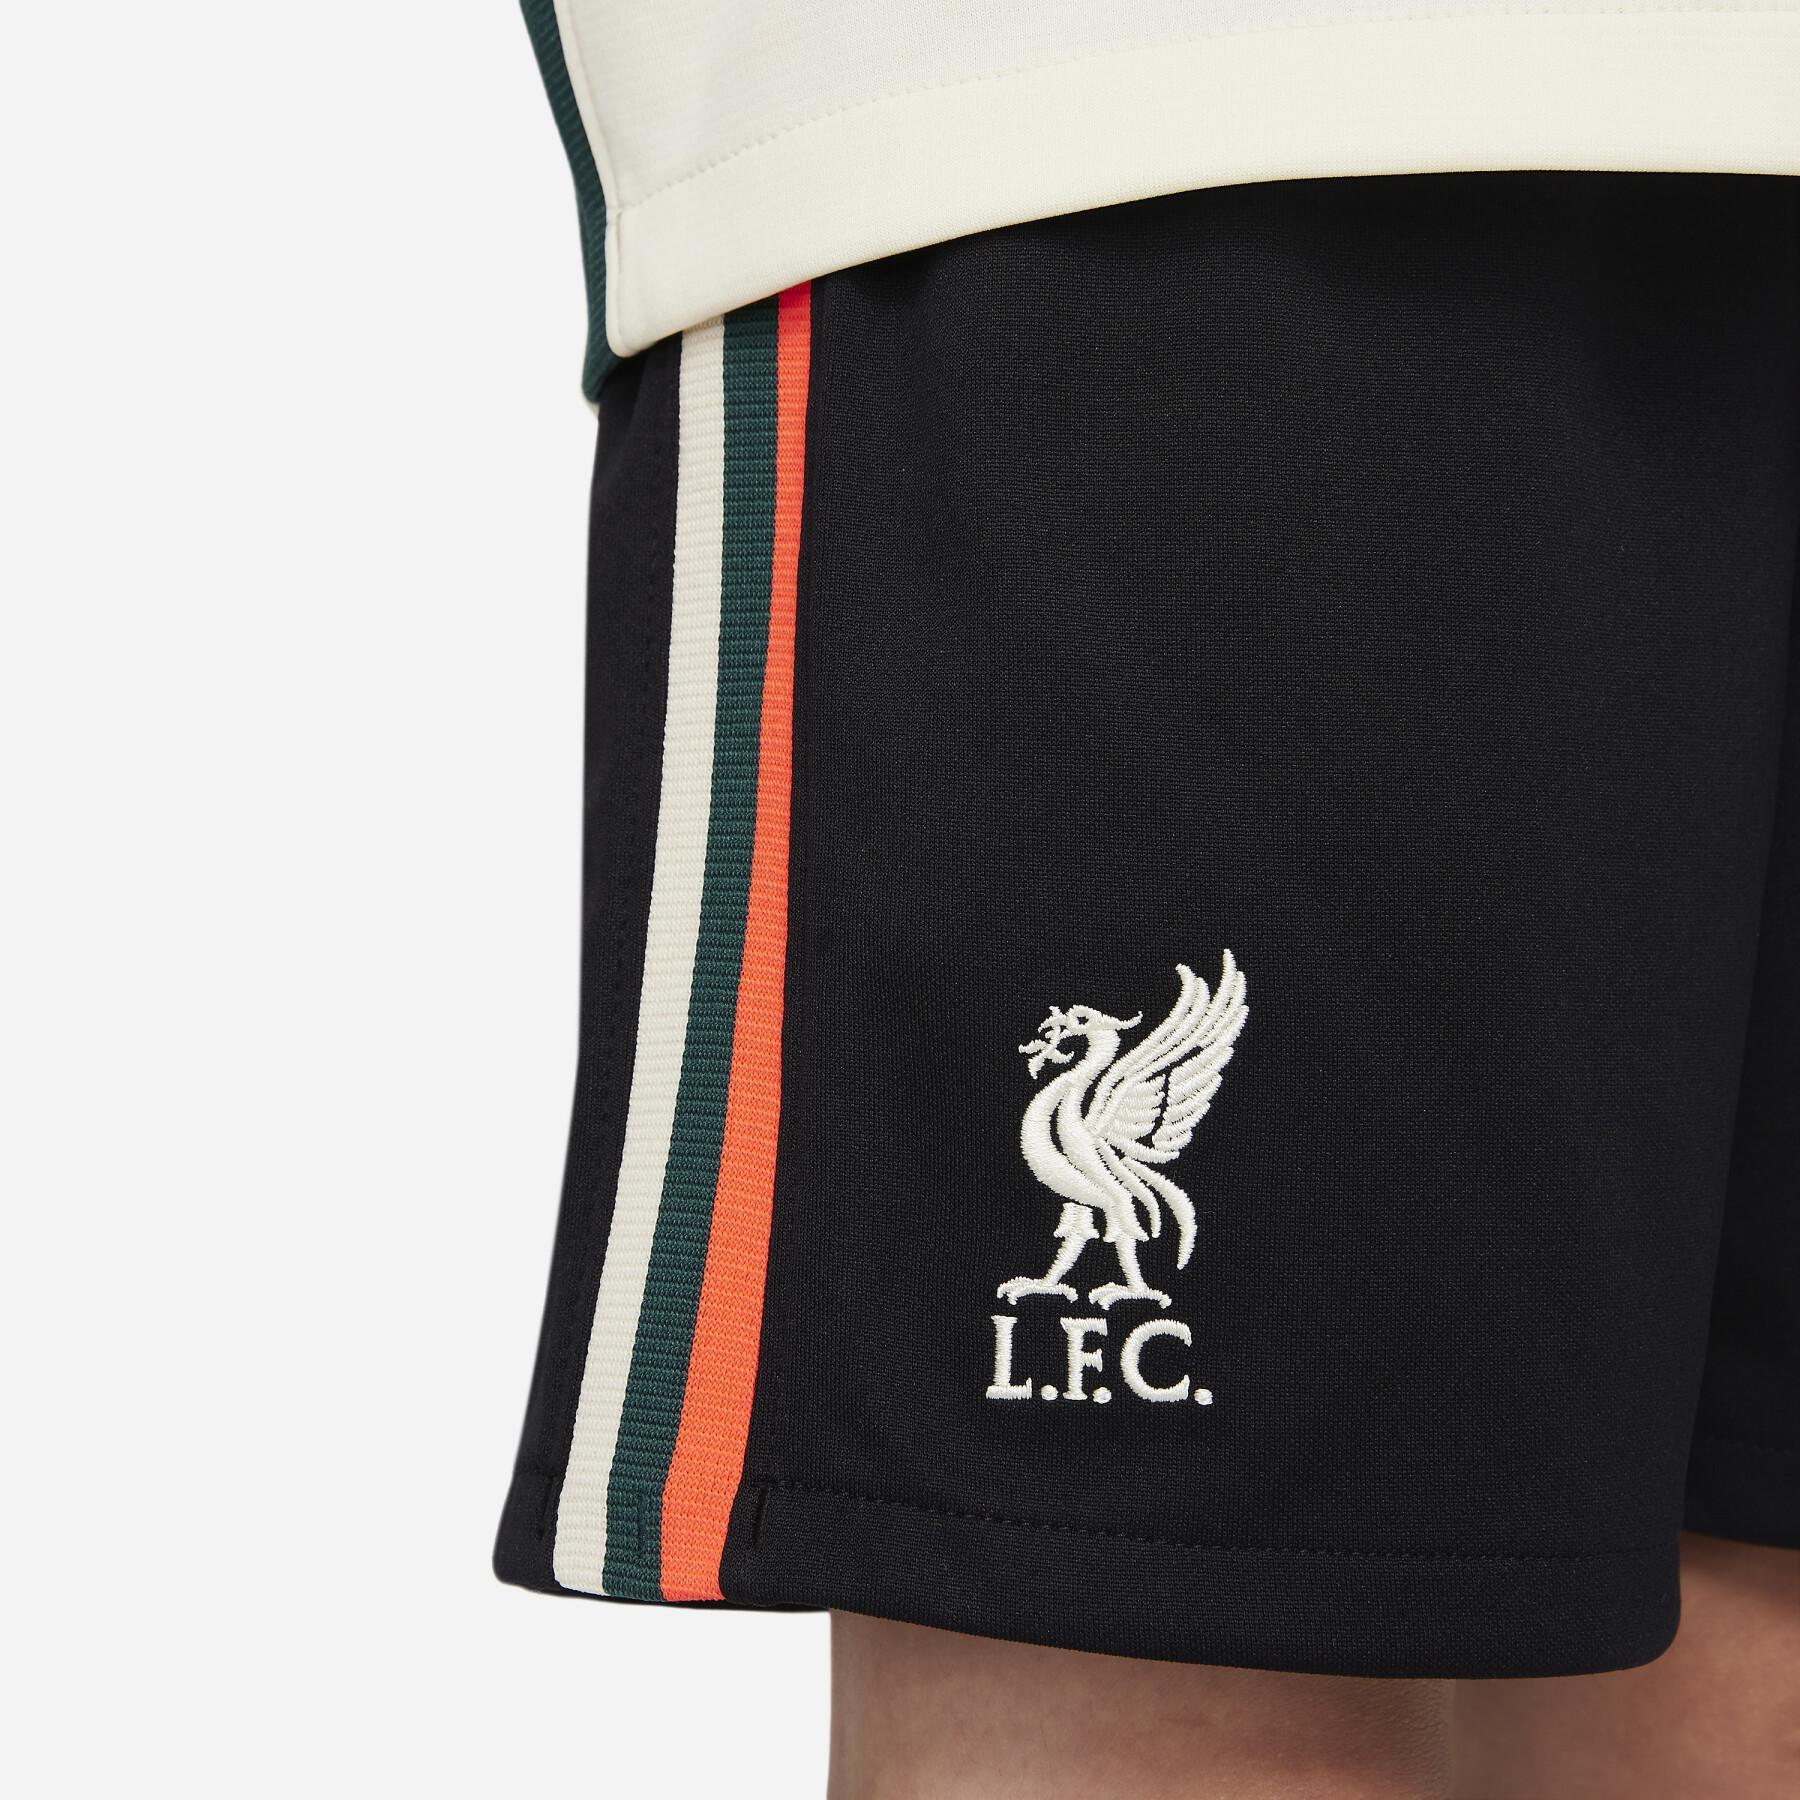 Mini kit all'aperto per bambini Liverpool FC 2021/22